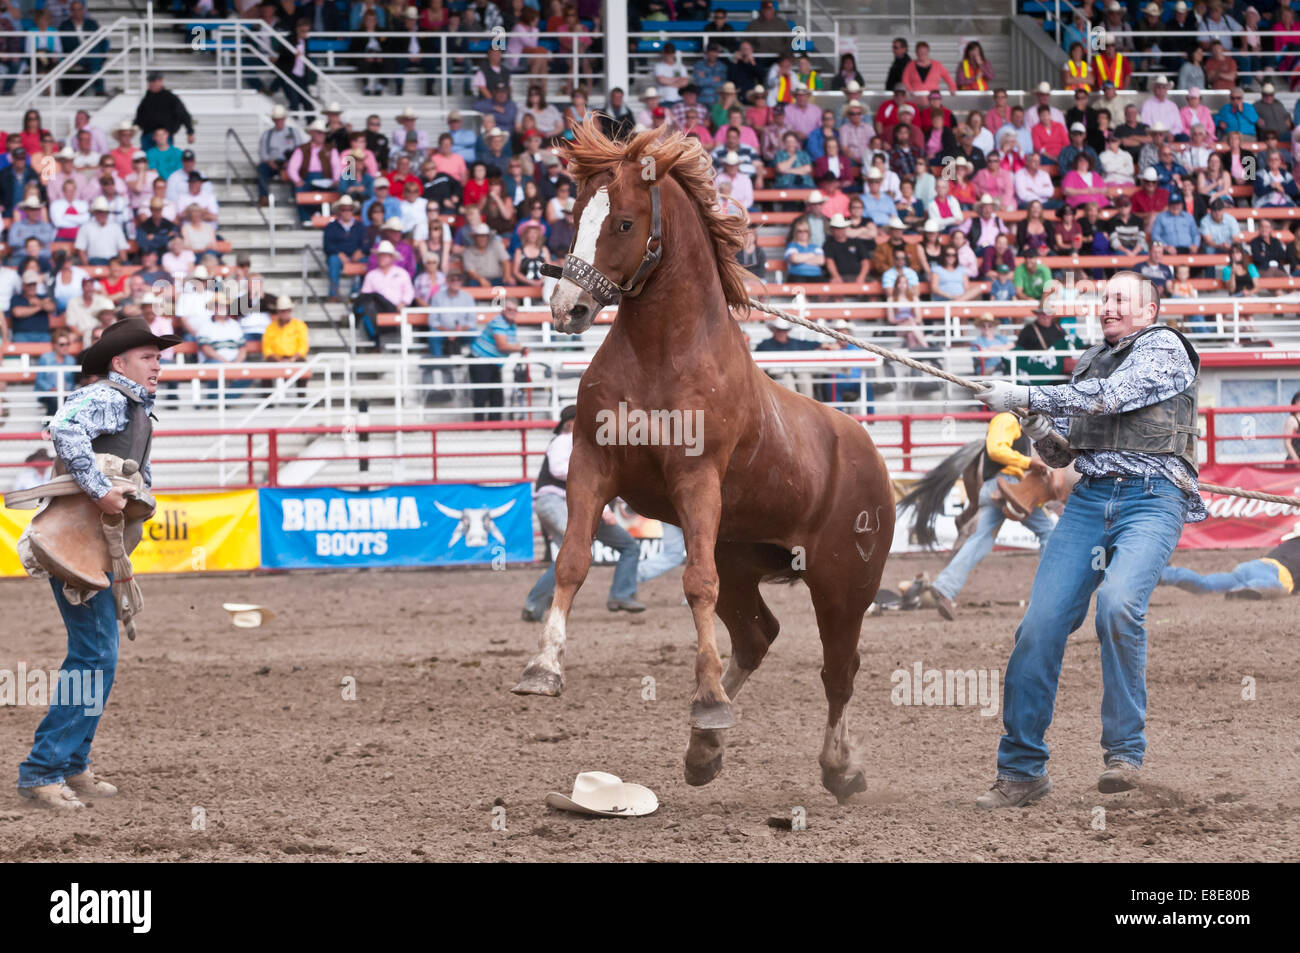 Wild horse roundup, Ponoka Stampede, rodeo, Ponoka, Alberta, Canada